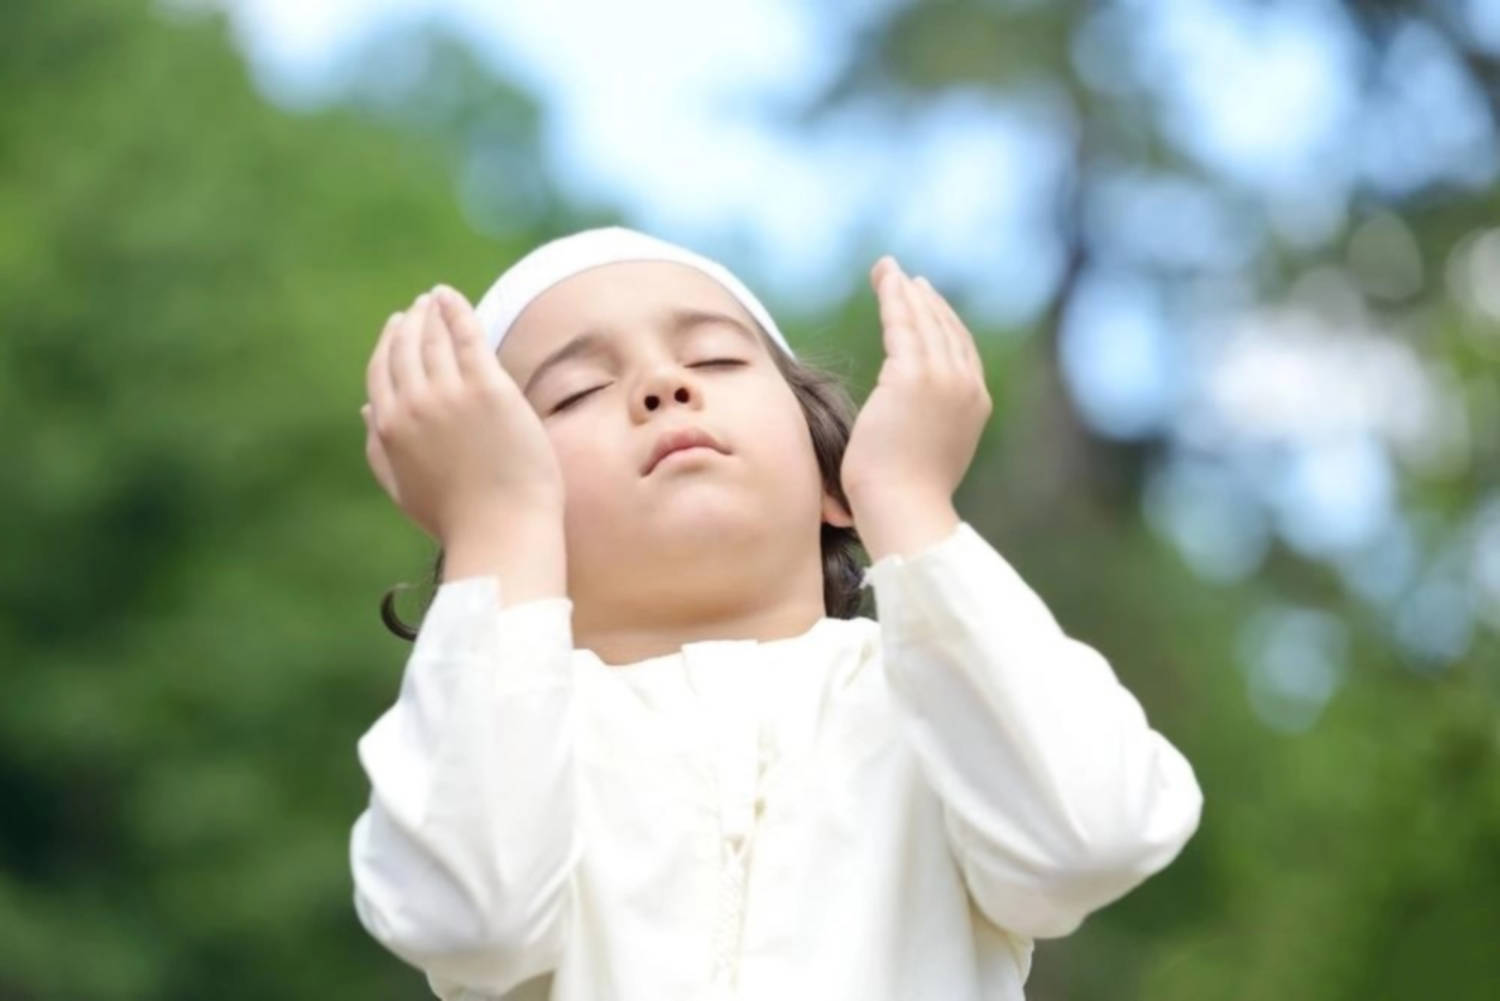 Adorable Praying Islamic Boy Background